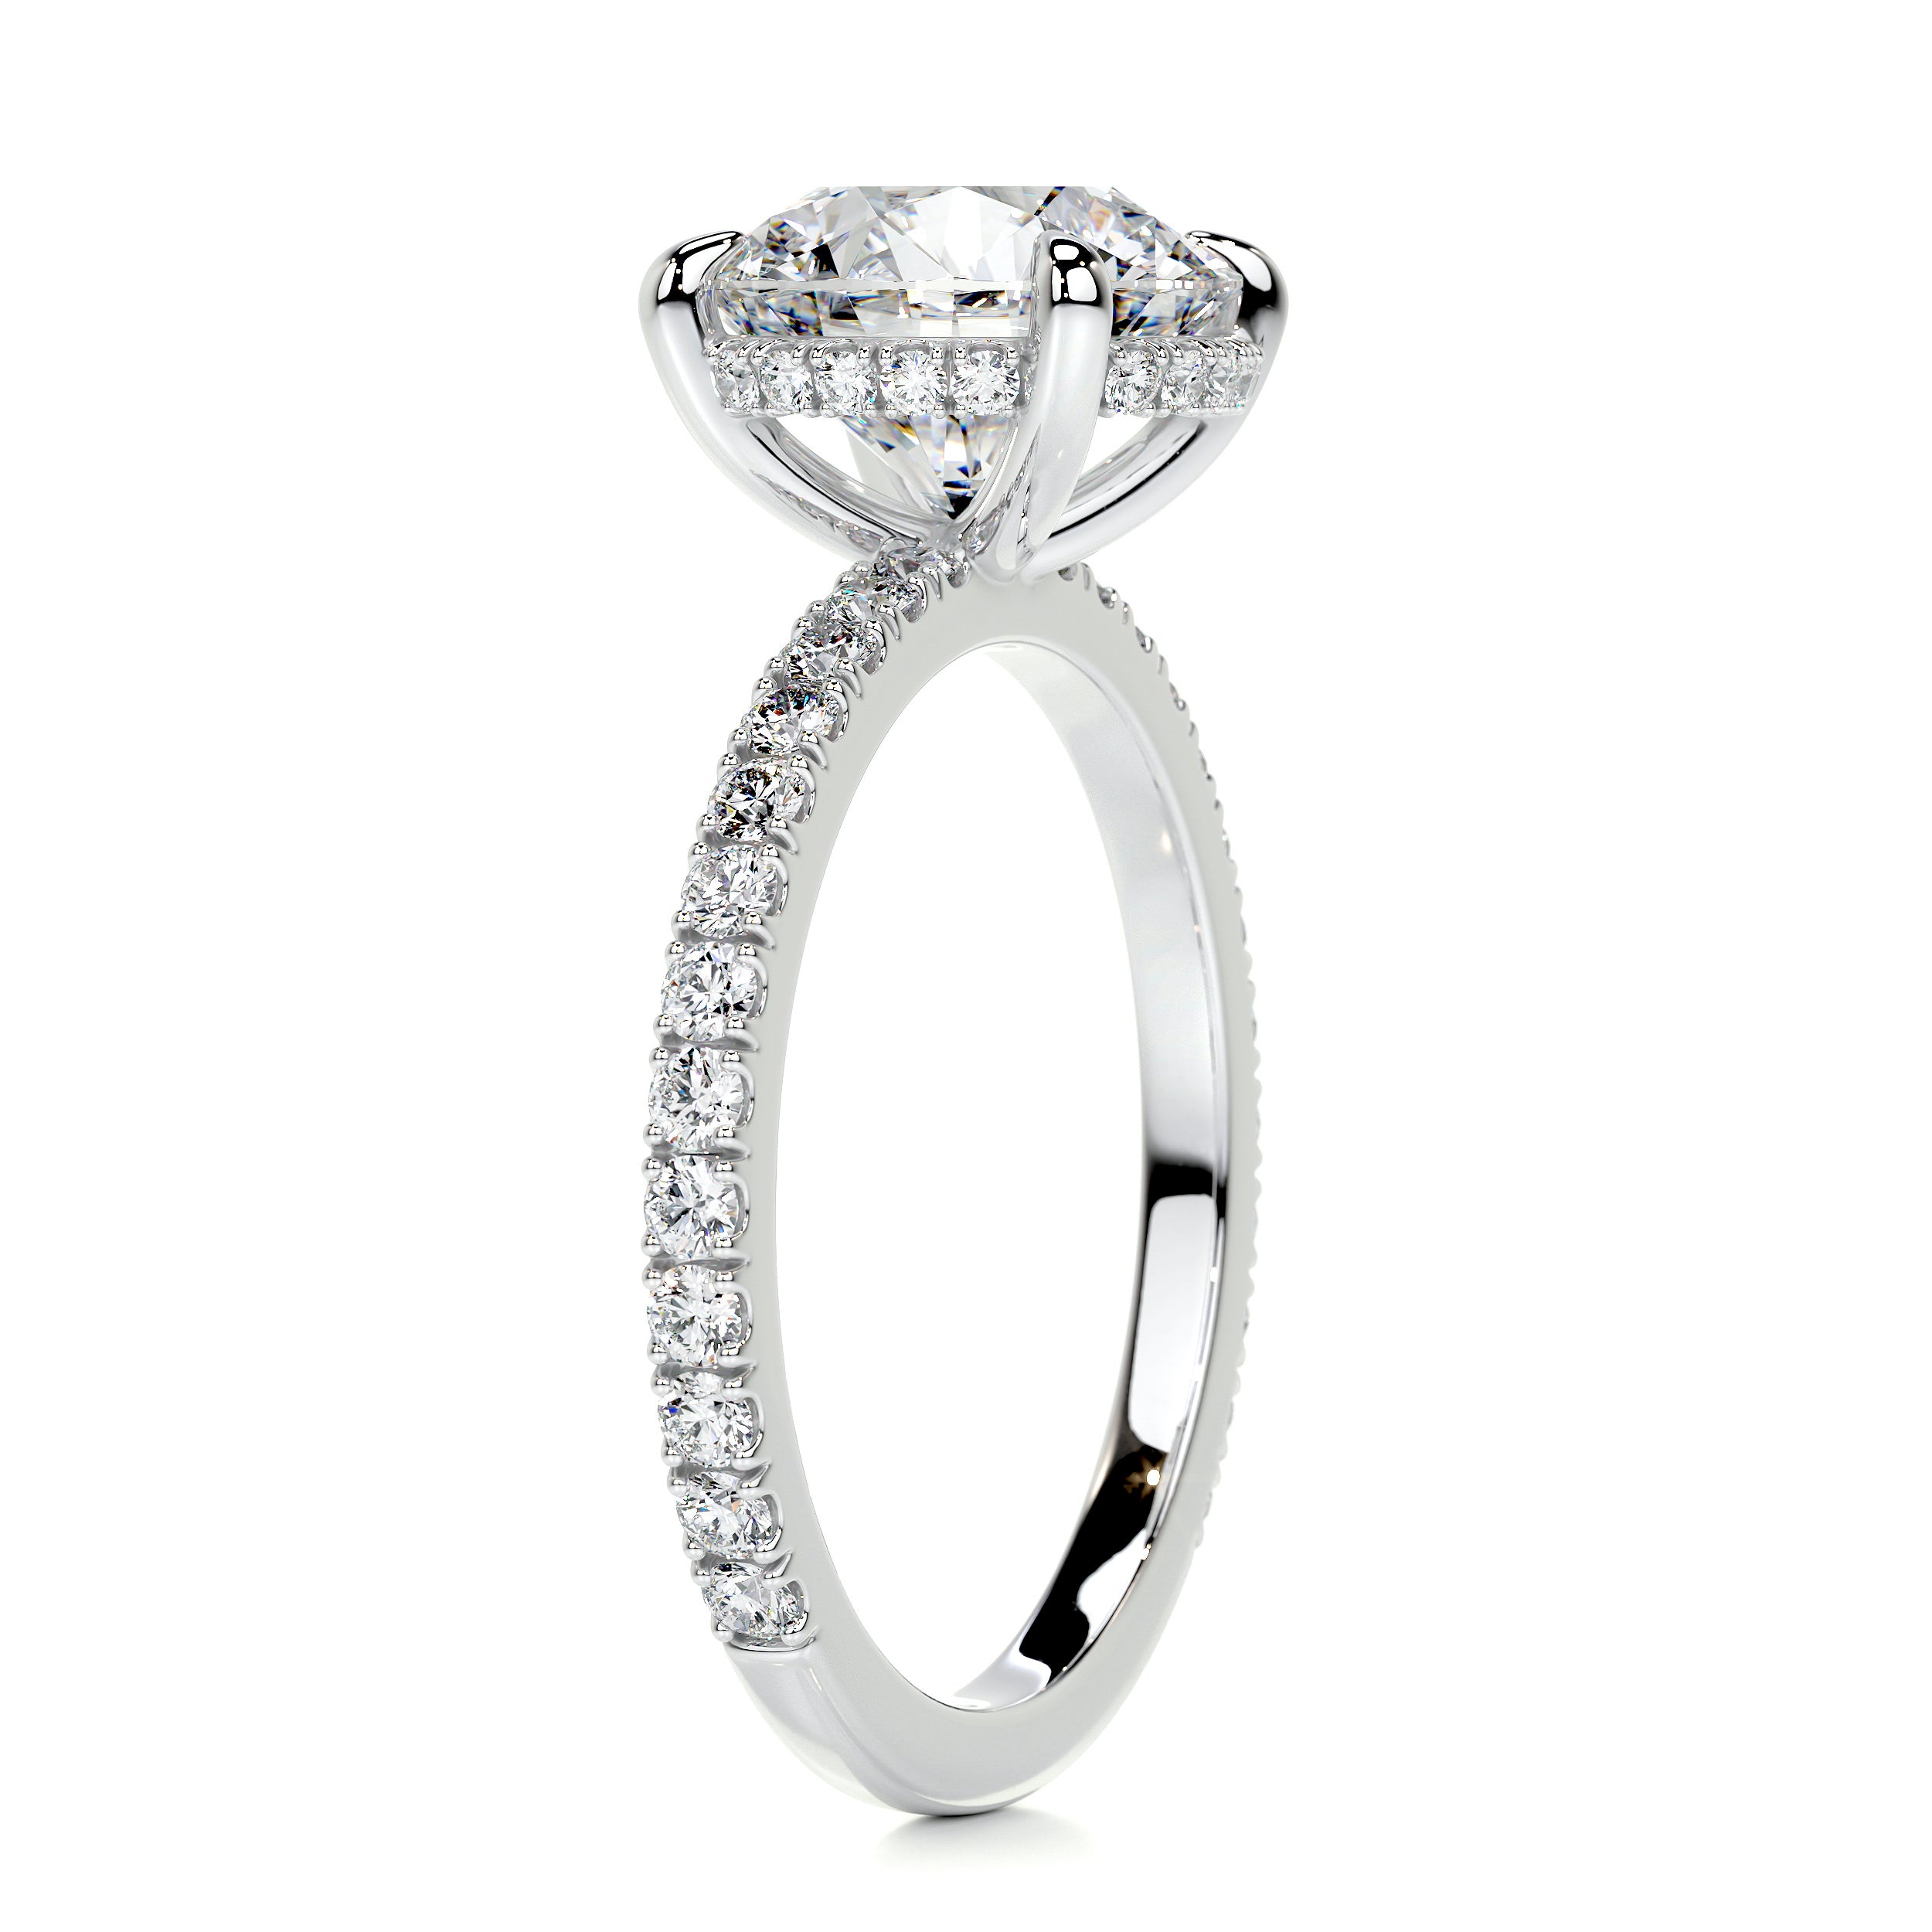 Valeria Diamond Engagement Ring   (3.00 Carat) -14K White Gold